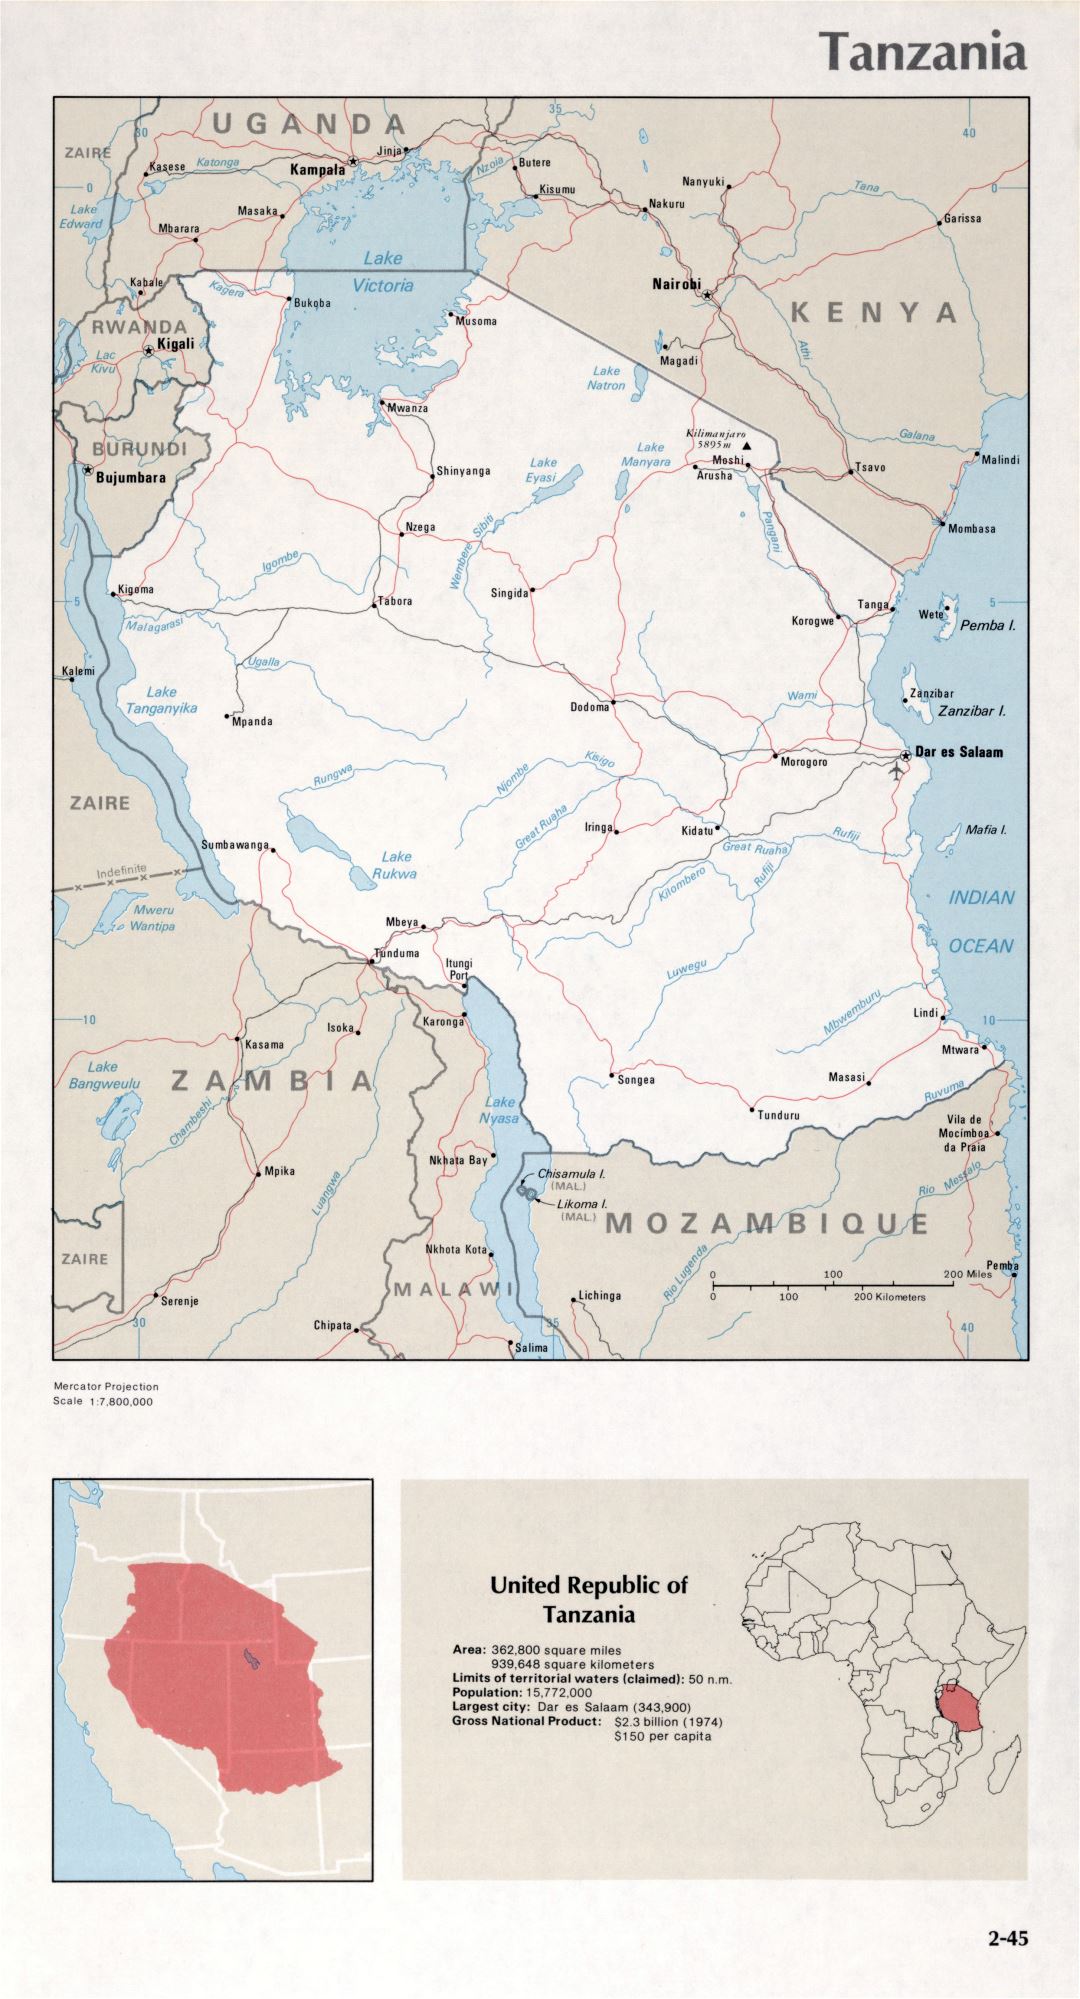 Map of Tanzania (2-45)